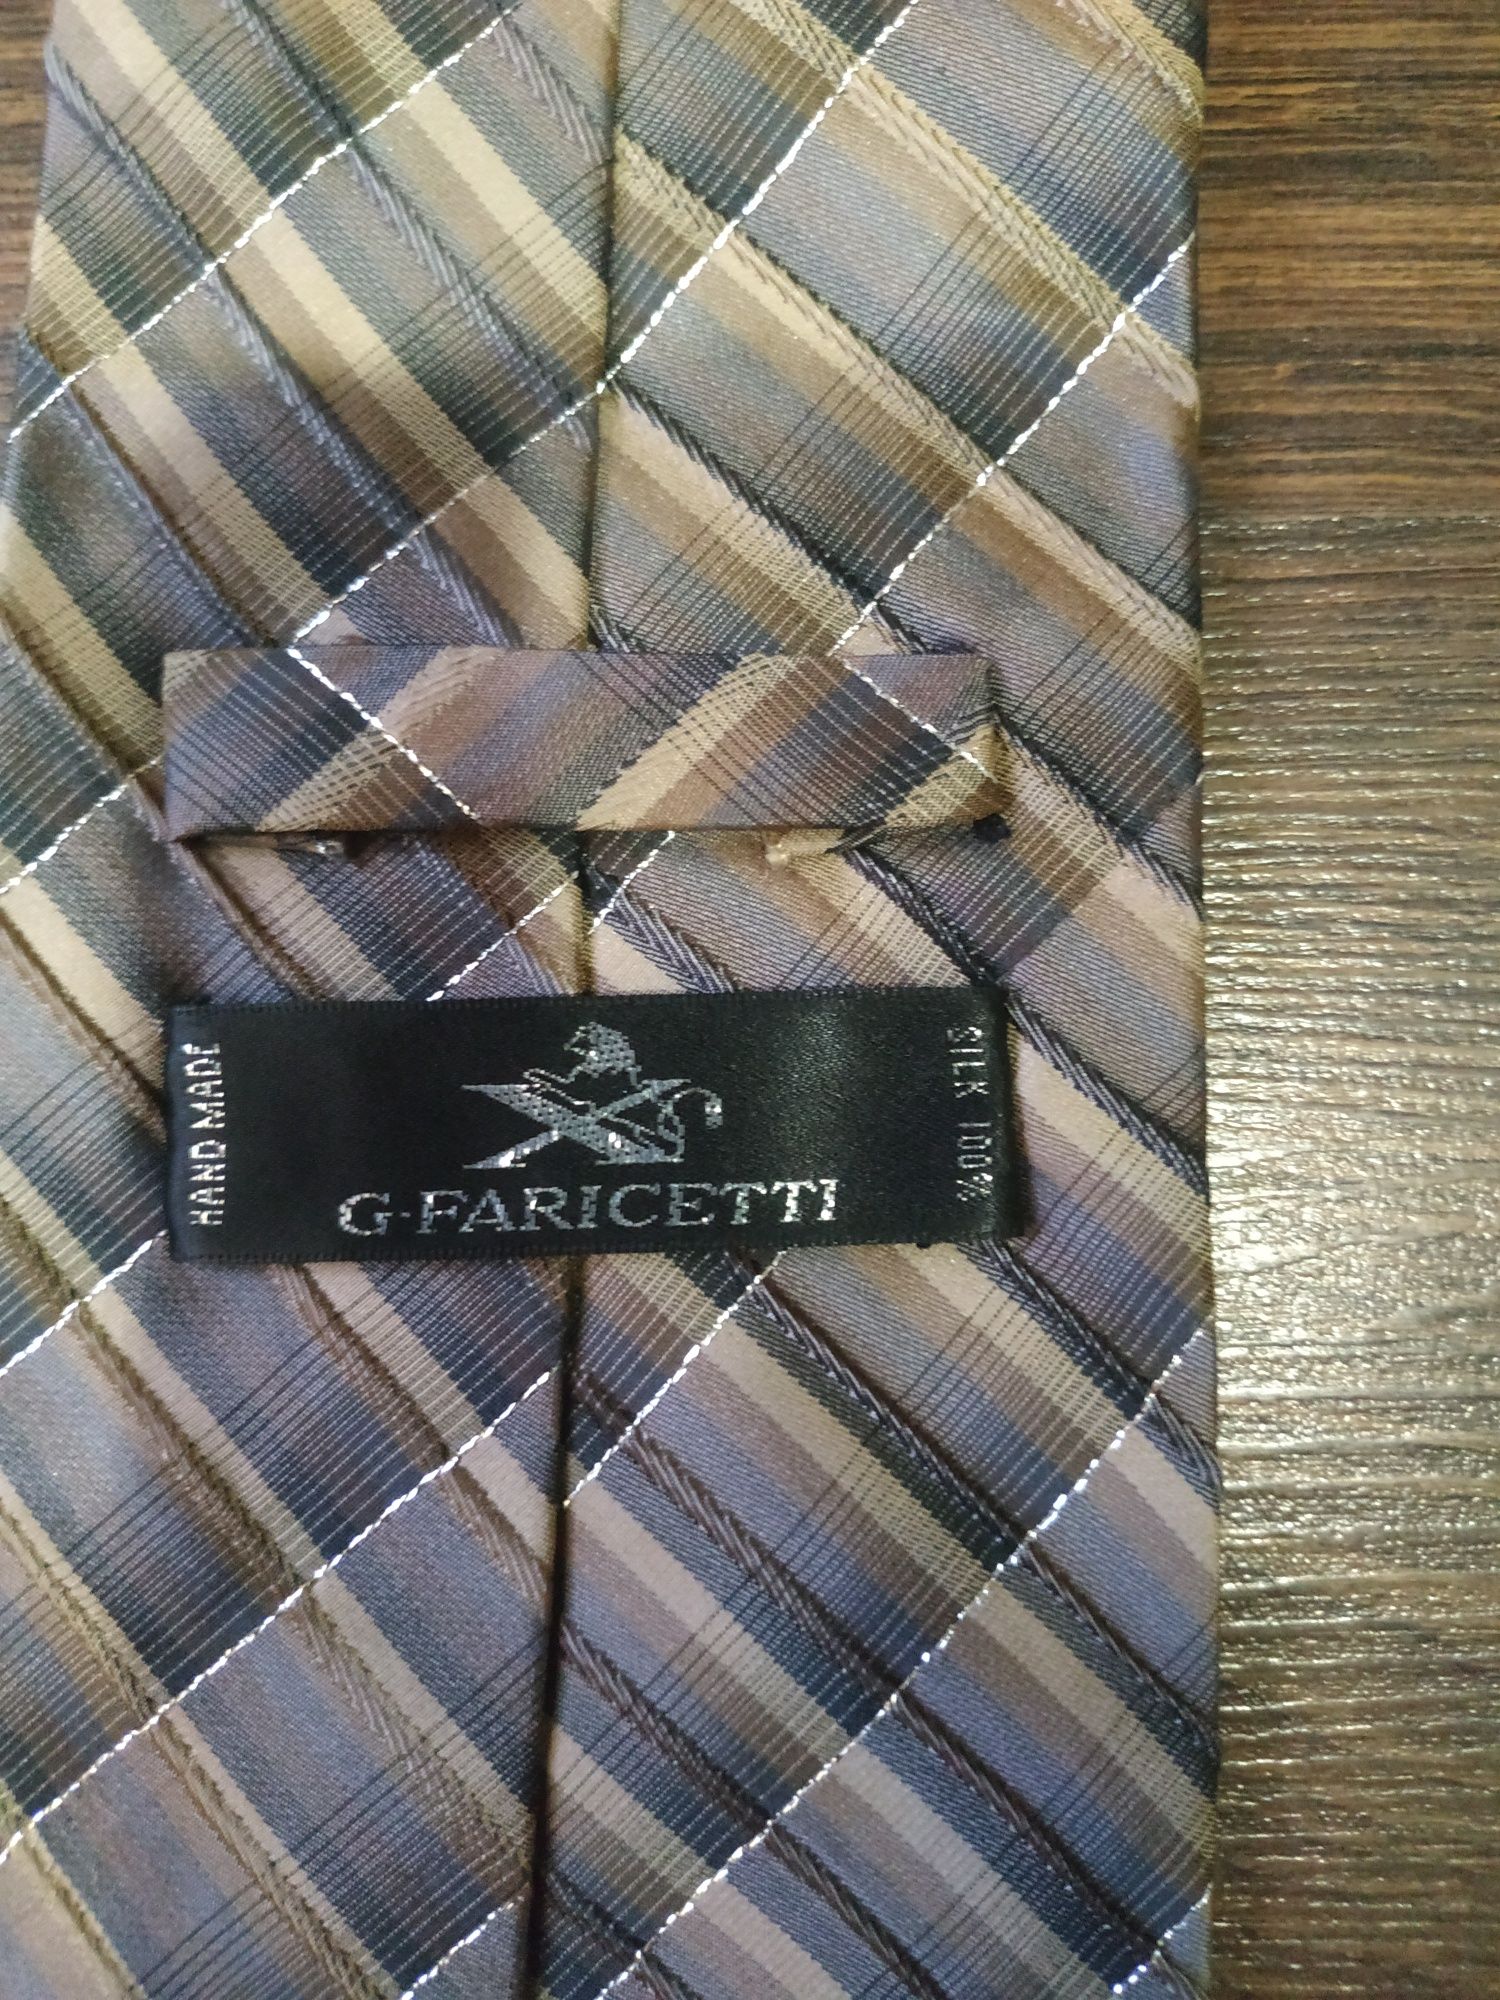 Краватка Галстук G-Faricetti, Romendik, Milimetrec